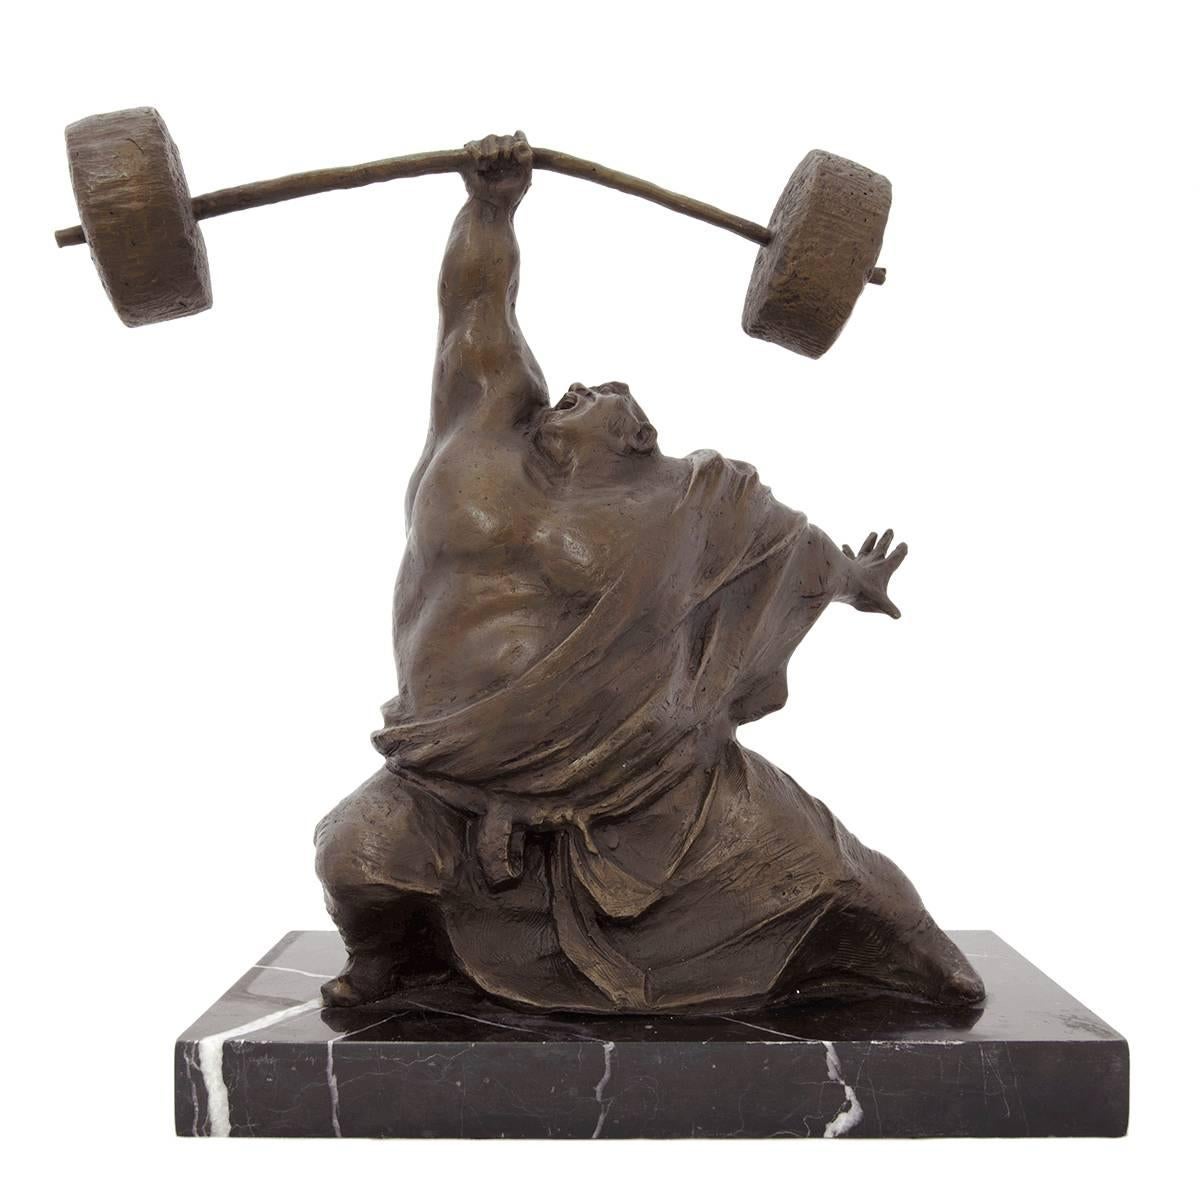 Yaohui Wu Figurative Sculpture - Weight Lifter Chinese Contemporary Art Bronze Sclupture 